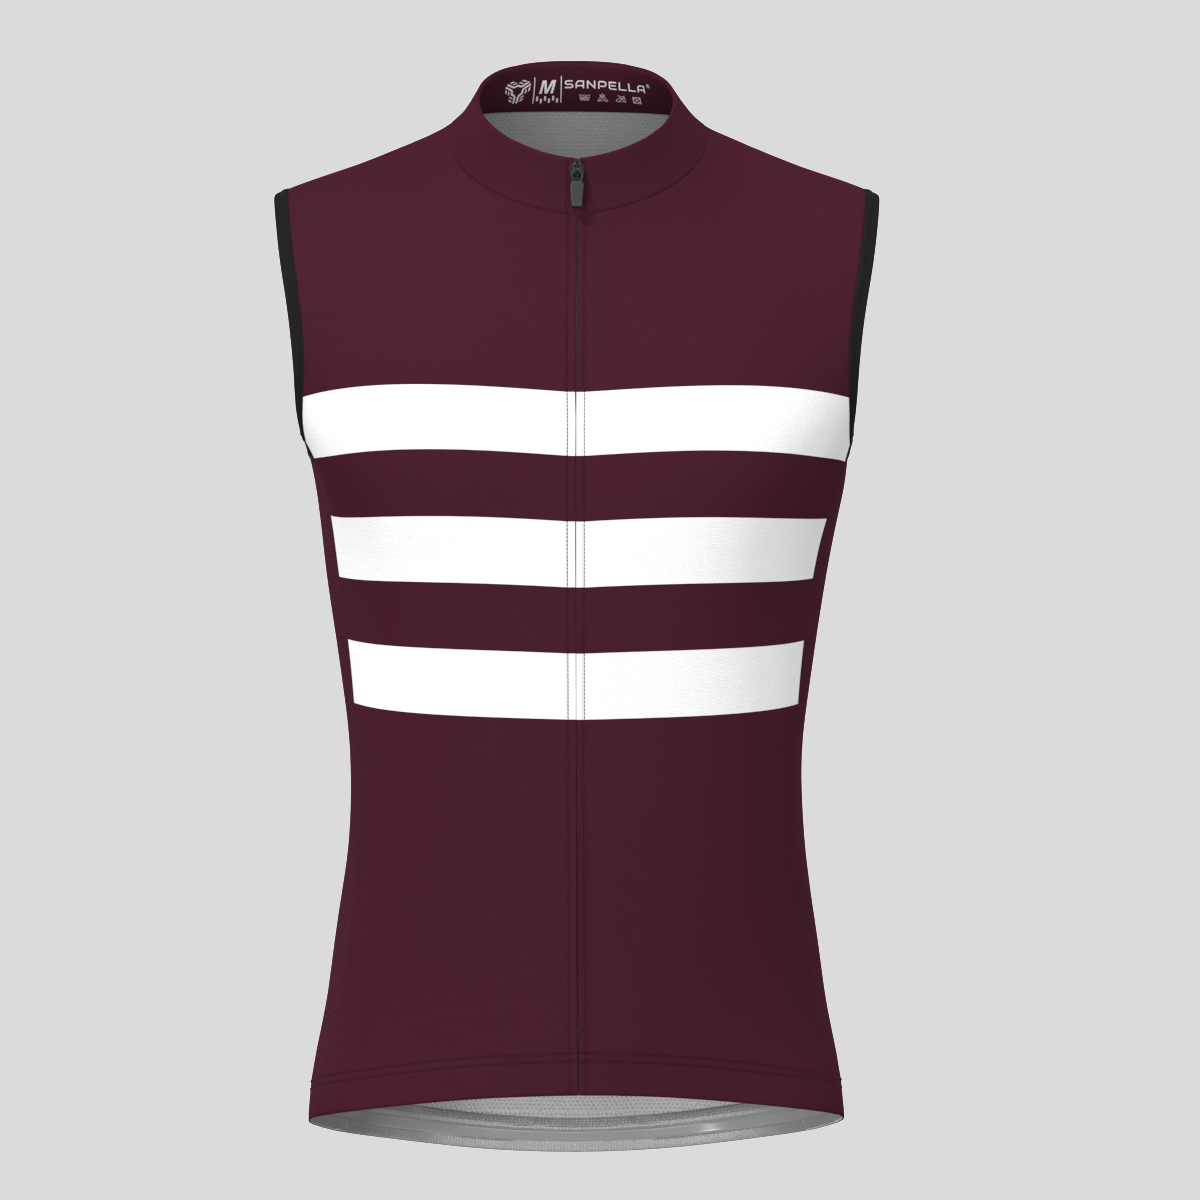 Men's Classic Stripes Sleeveless Cycling Jersey - Burgundy